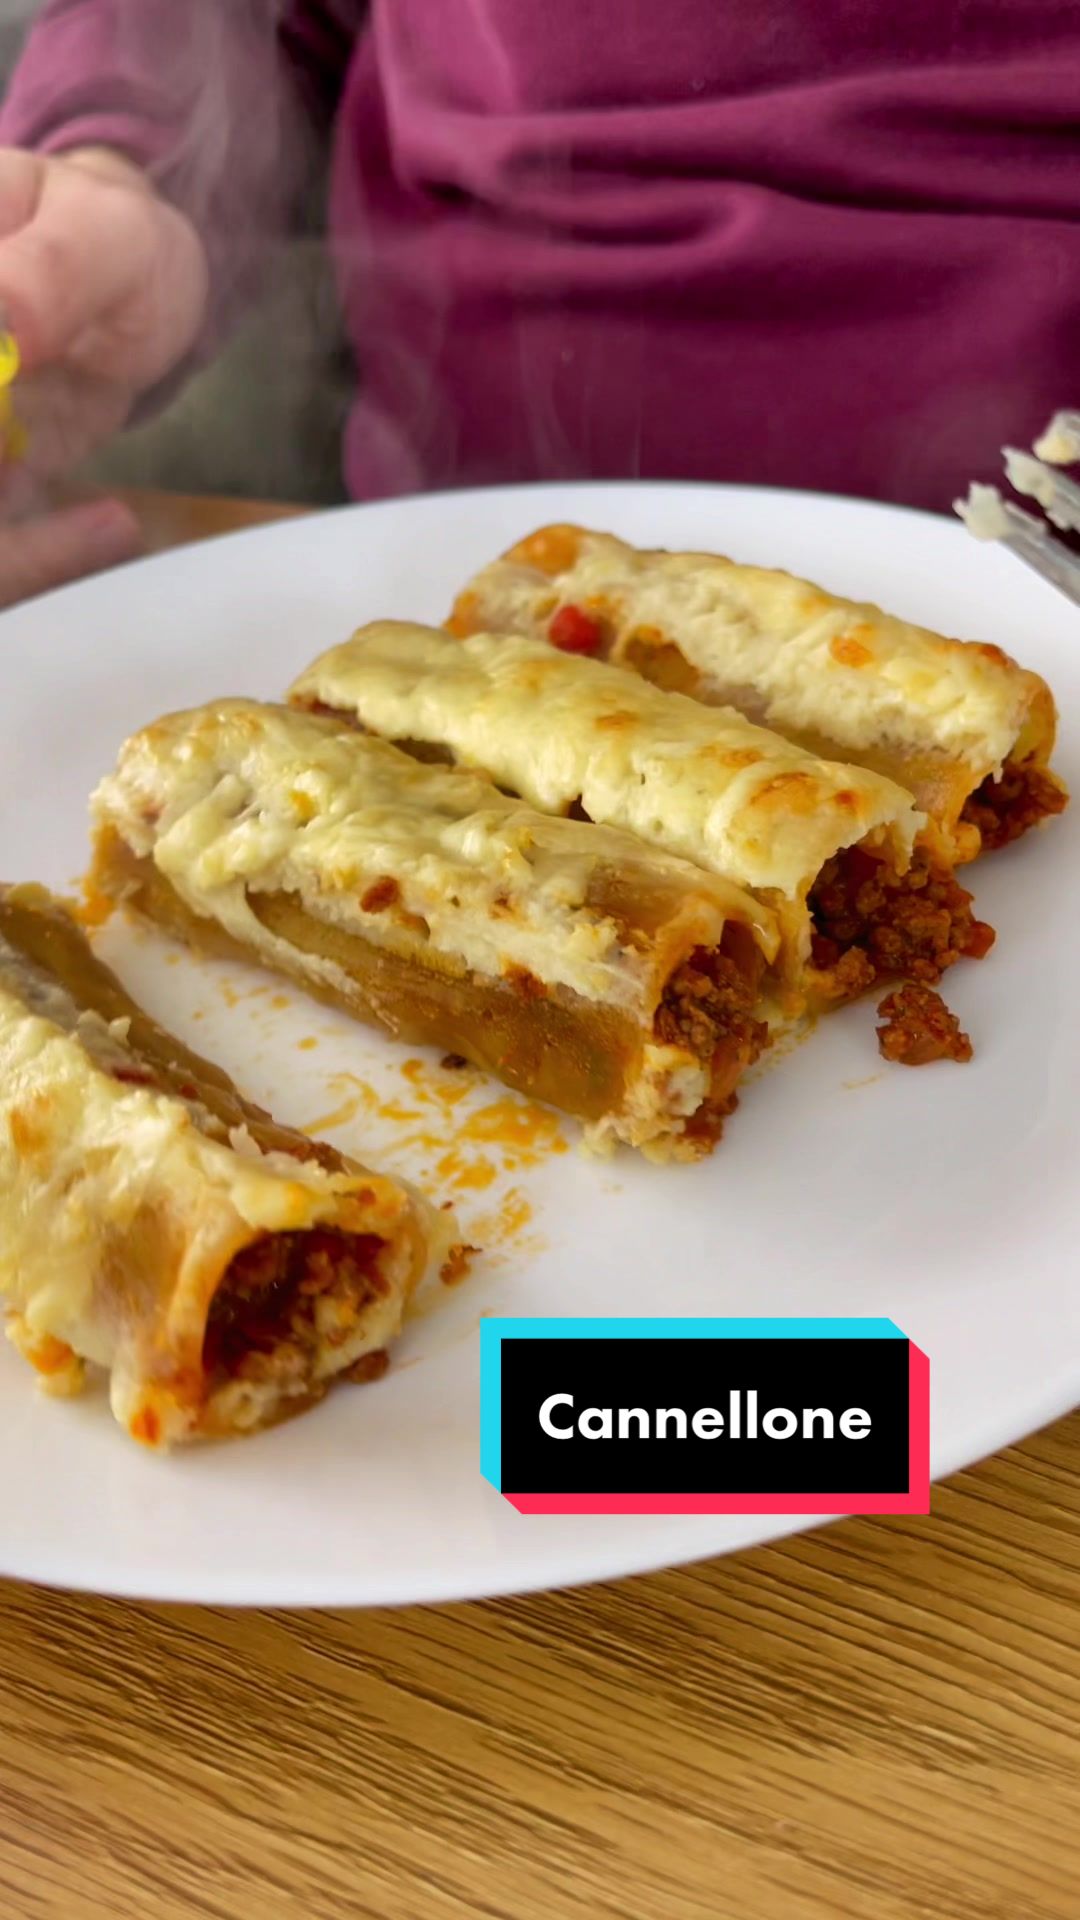 @Jeste li ikada pravili cannellone? ? Dobar tek! #balkan #for...